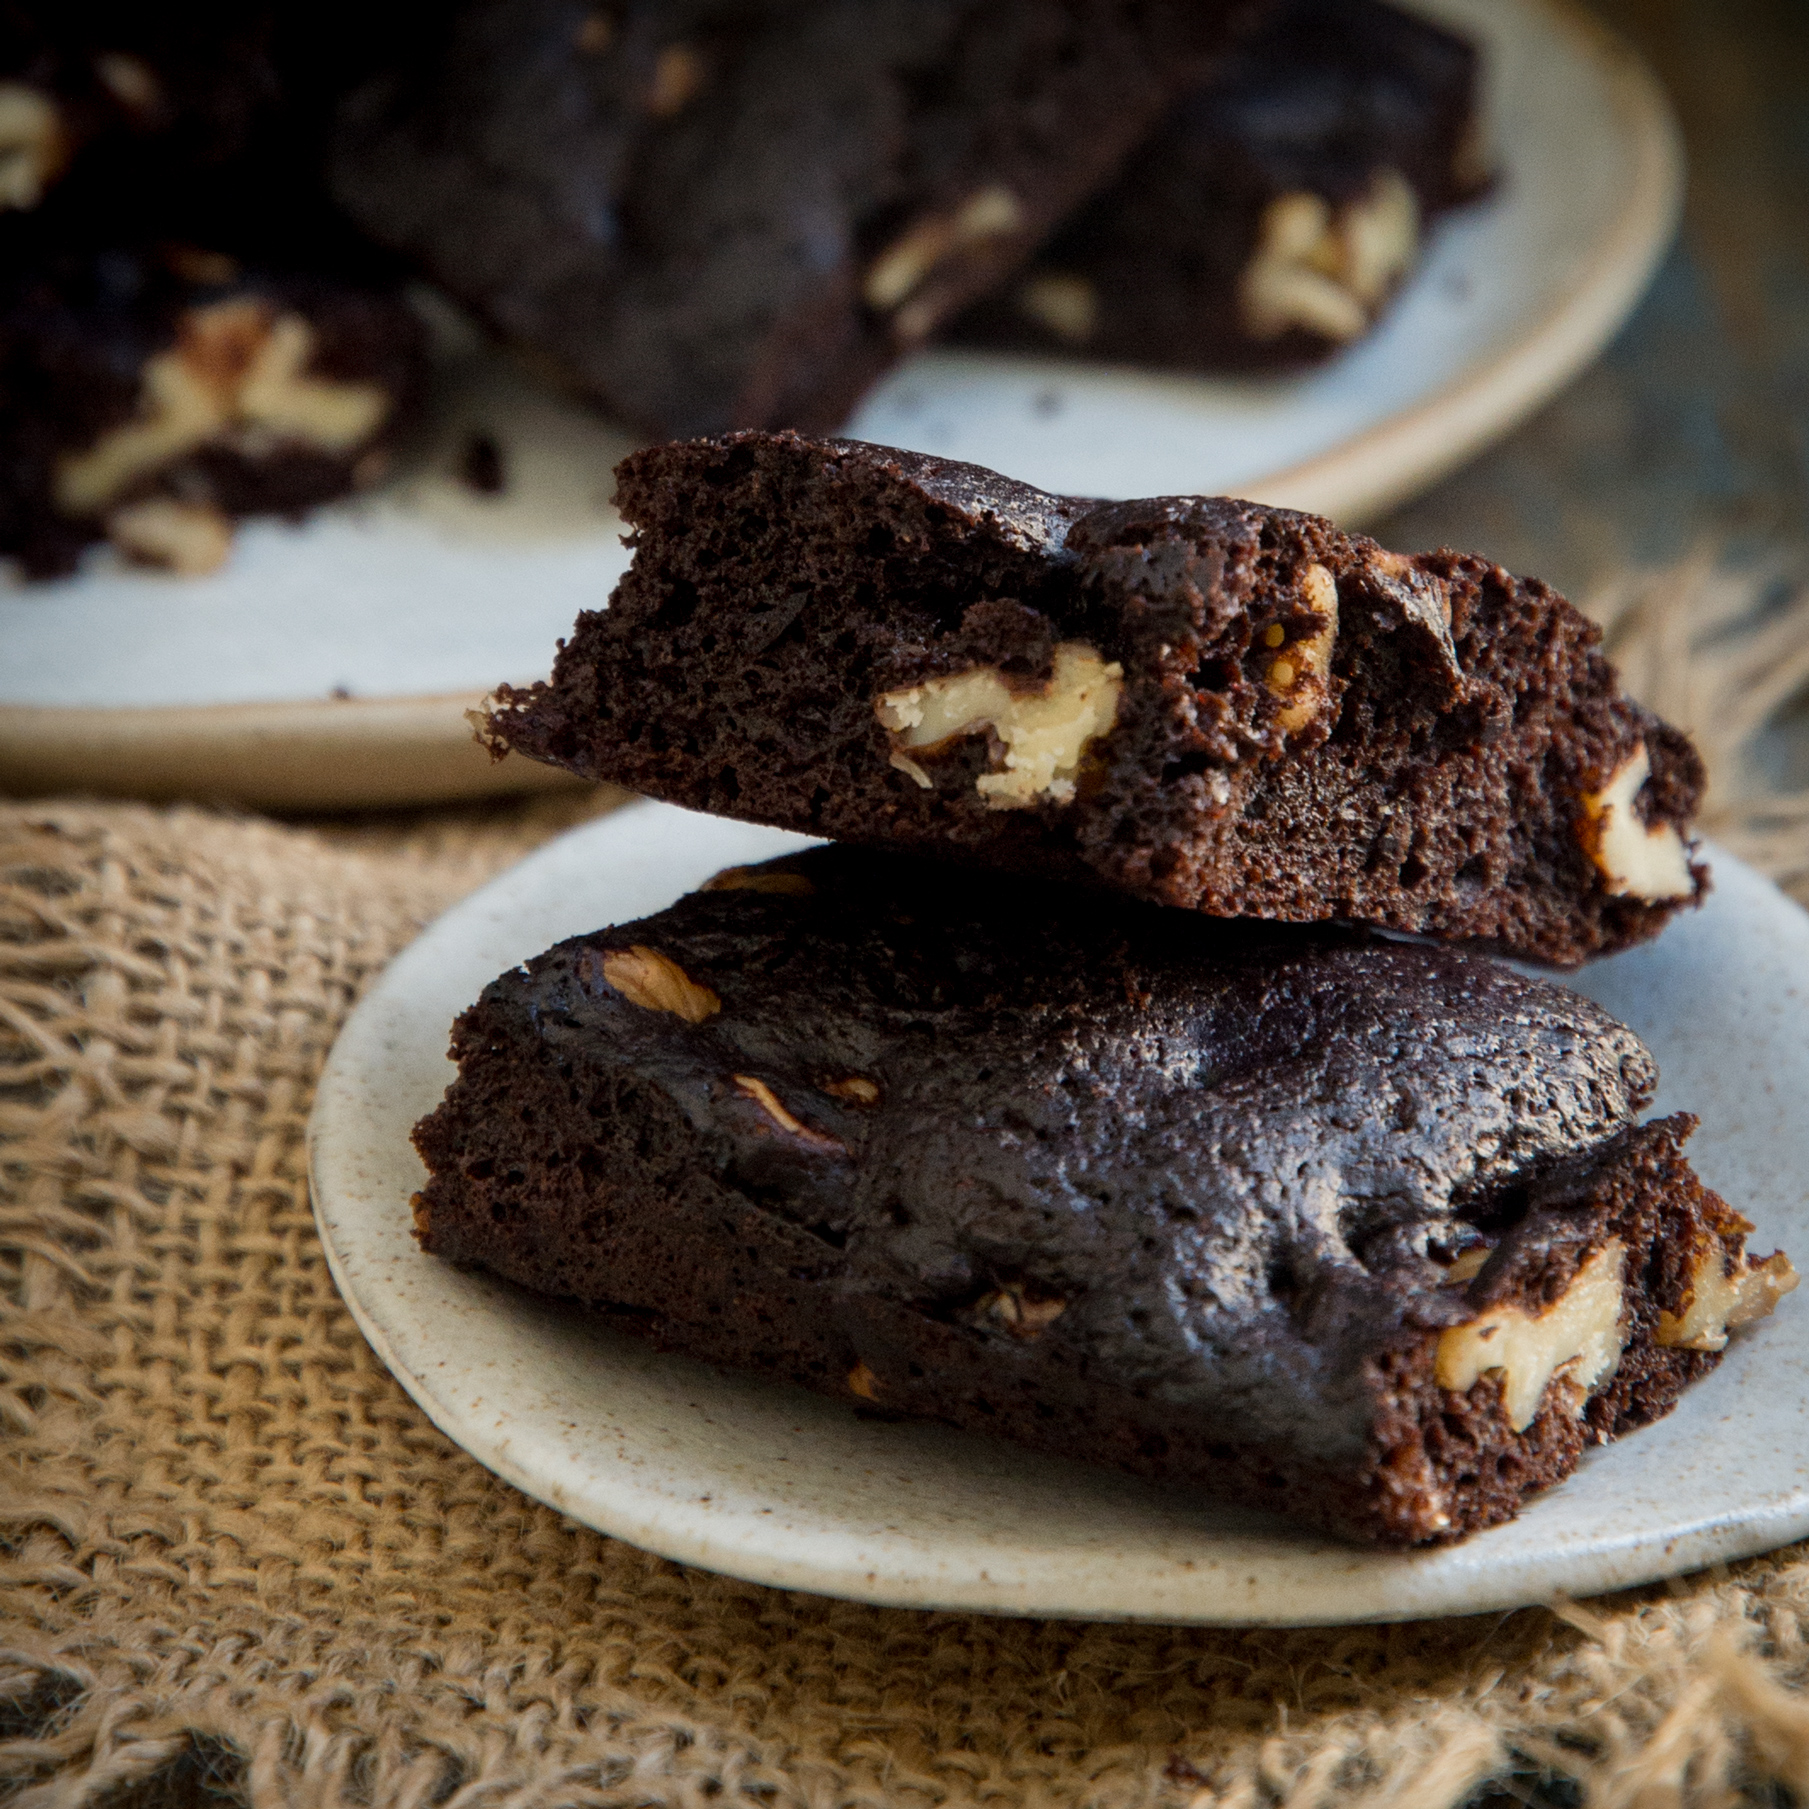 Easy Keto Chocolate Fudge Brownies - Simply So Healthy